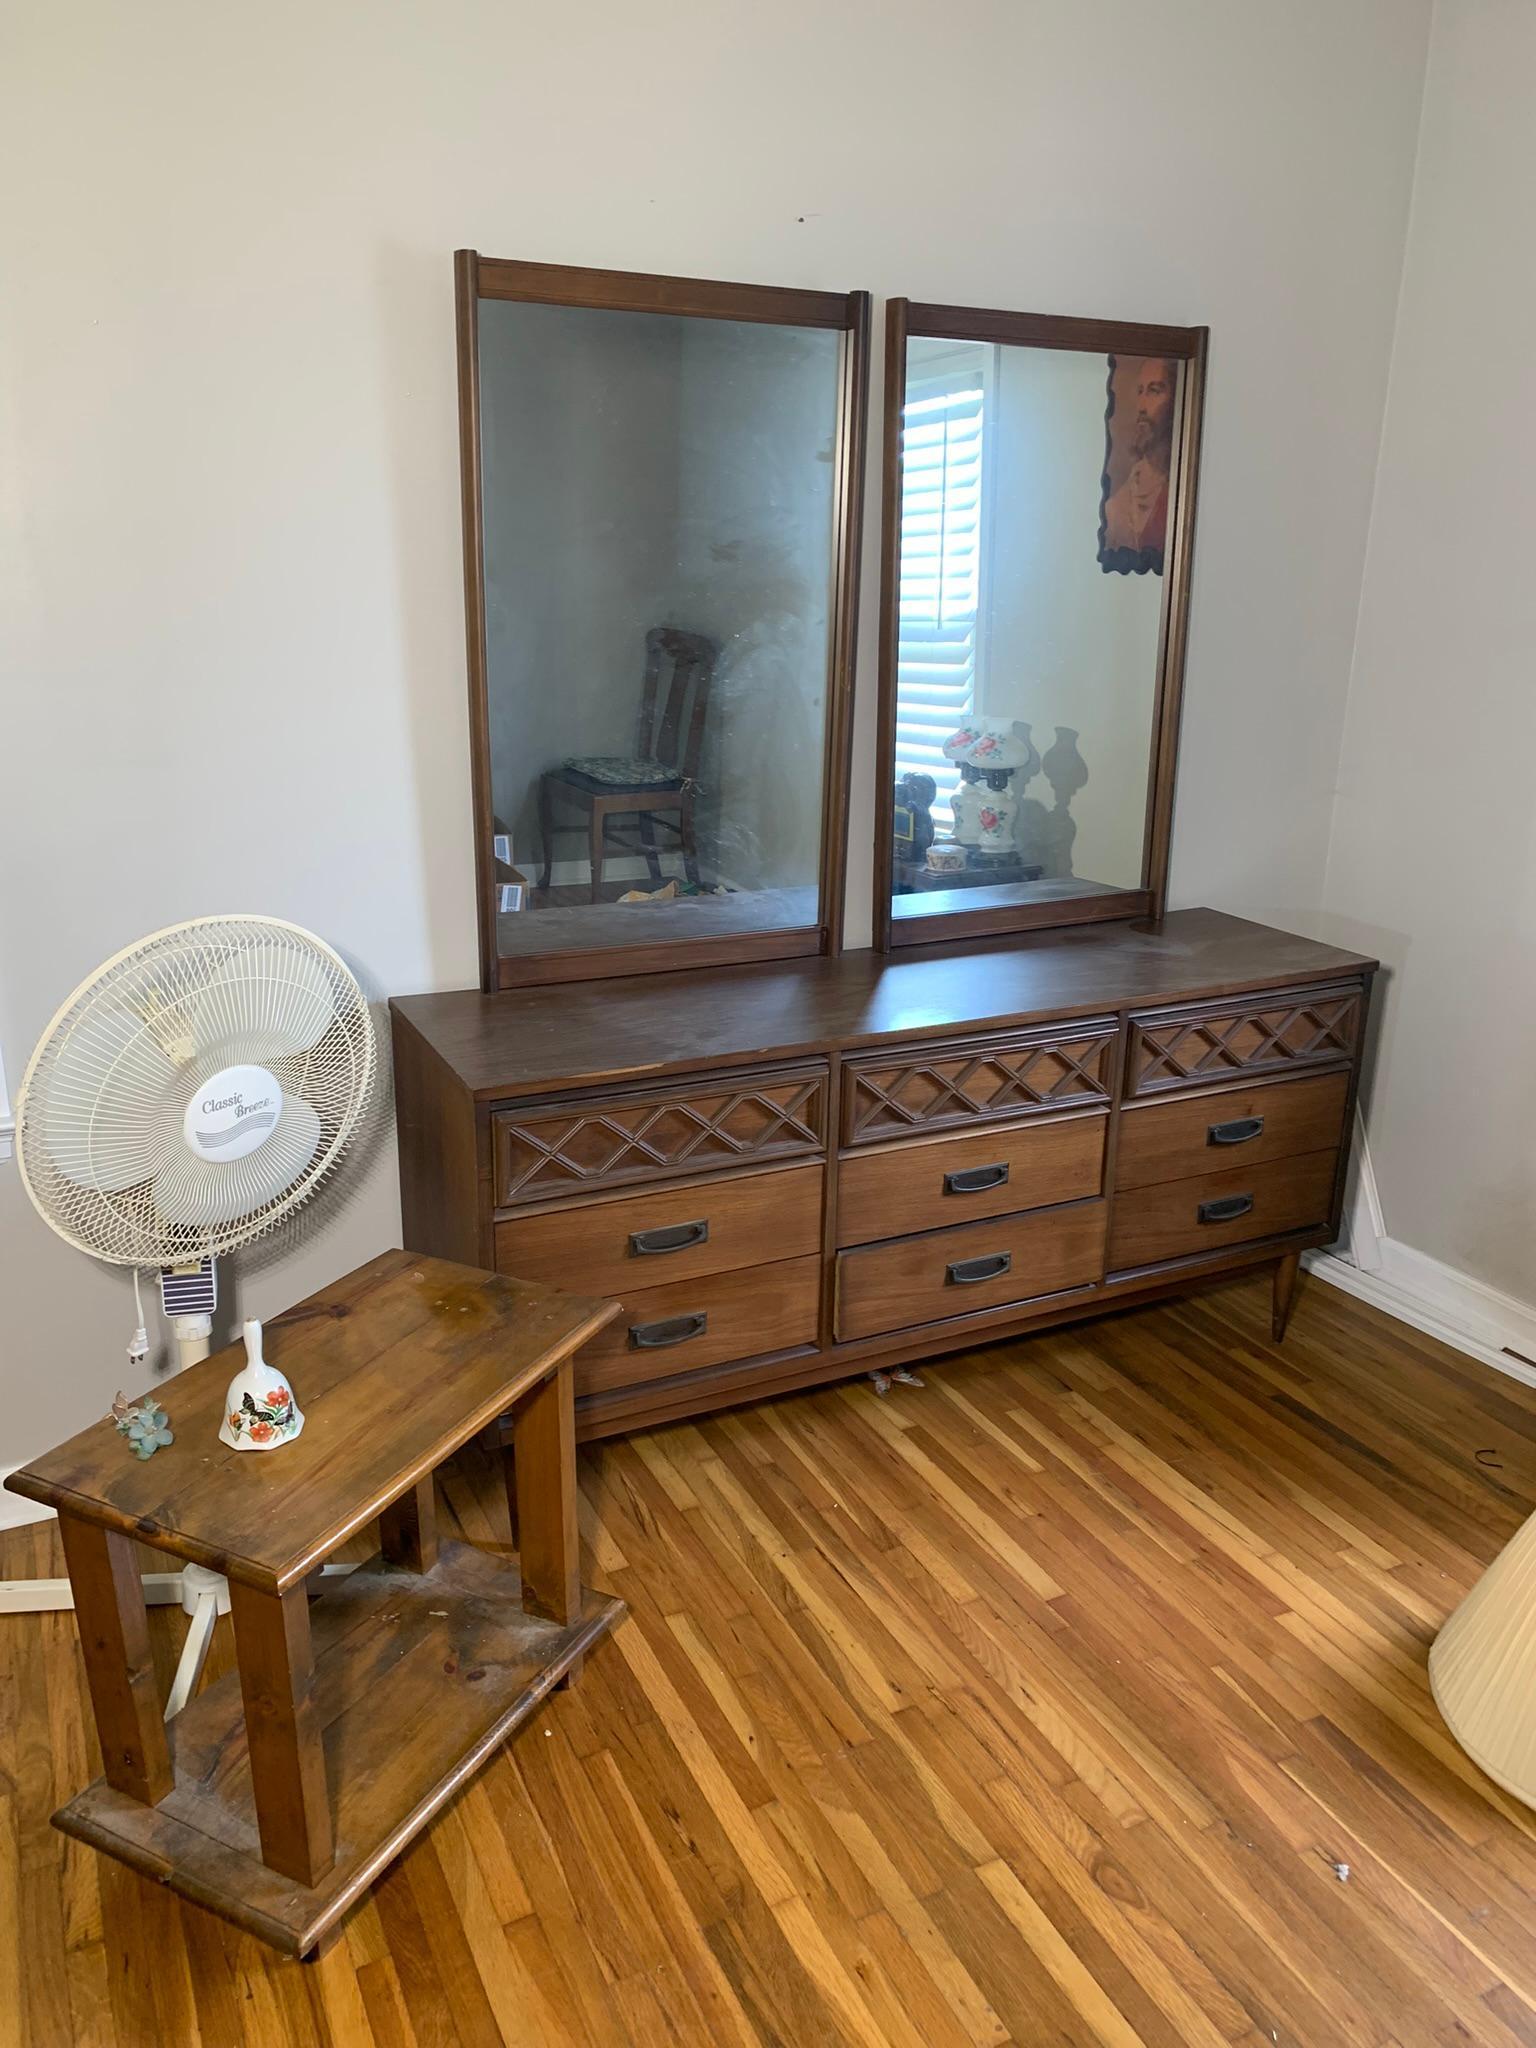 Bassett Furniture Dresser with Mirrors, Dog Bank, Soft Goods, Blankets, Mirror Display Shelf & More